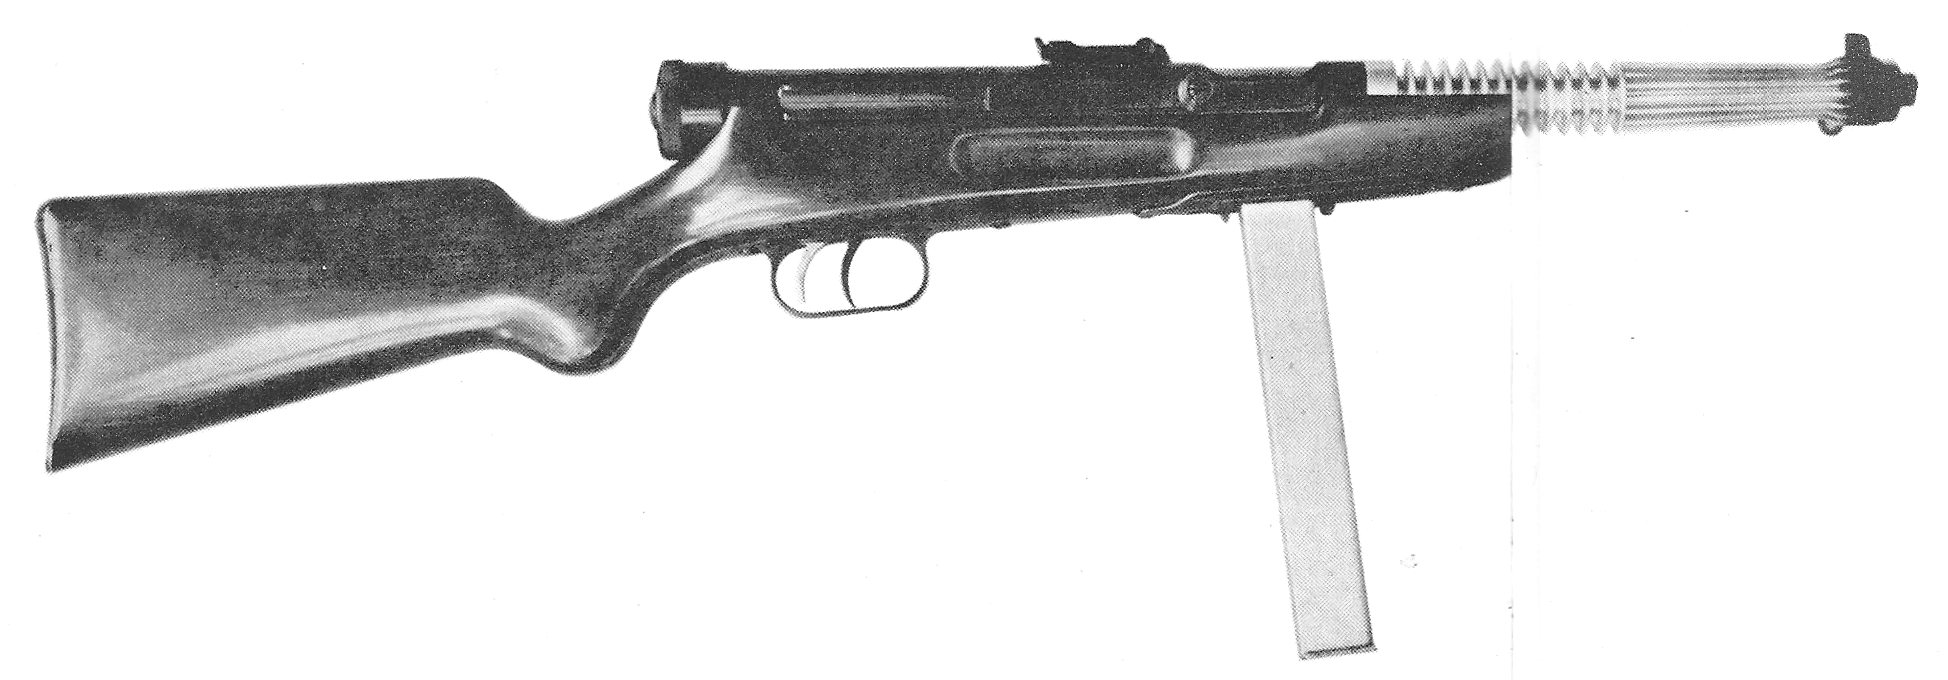 Beretta Model 38A Submachine Gun (SMG)